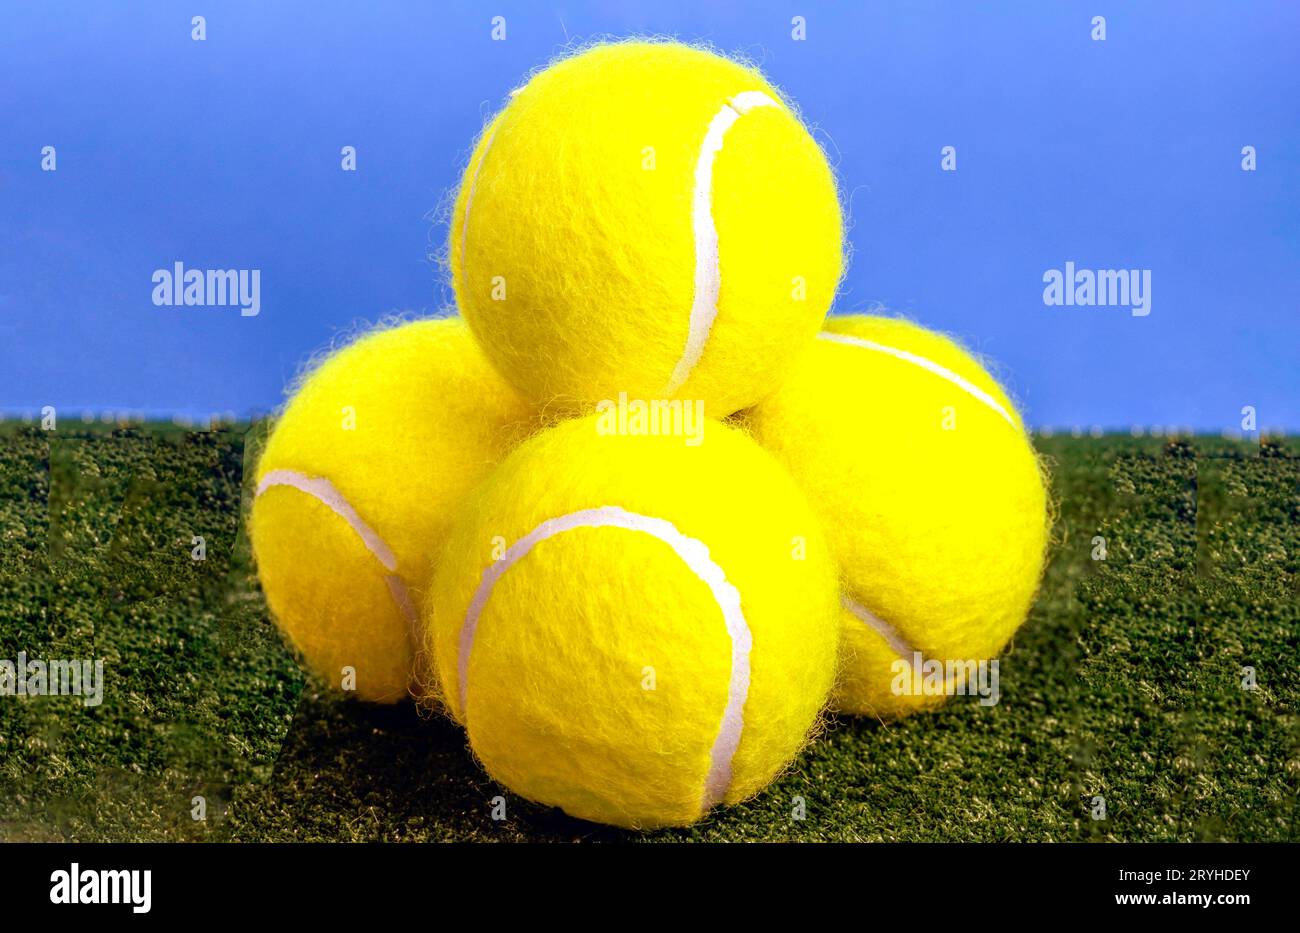 Four yellow tennis balls in studio setting, Greater London, England, United Kingdom Stock Photo